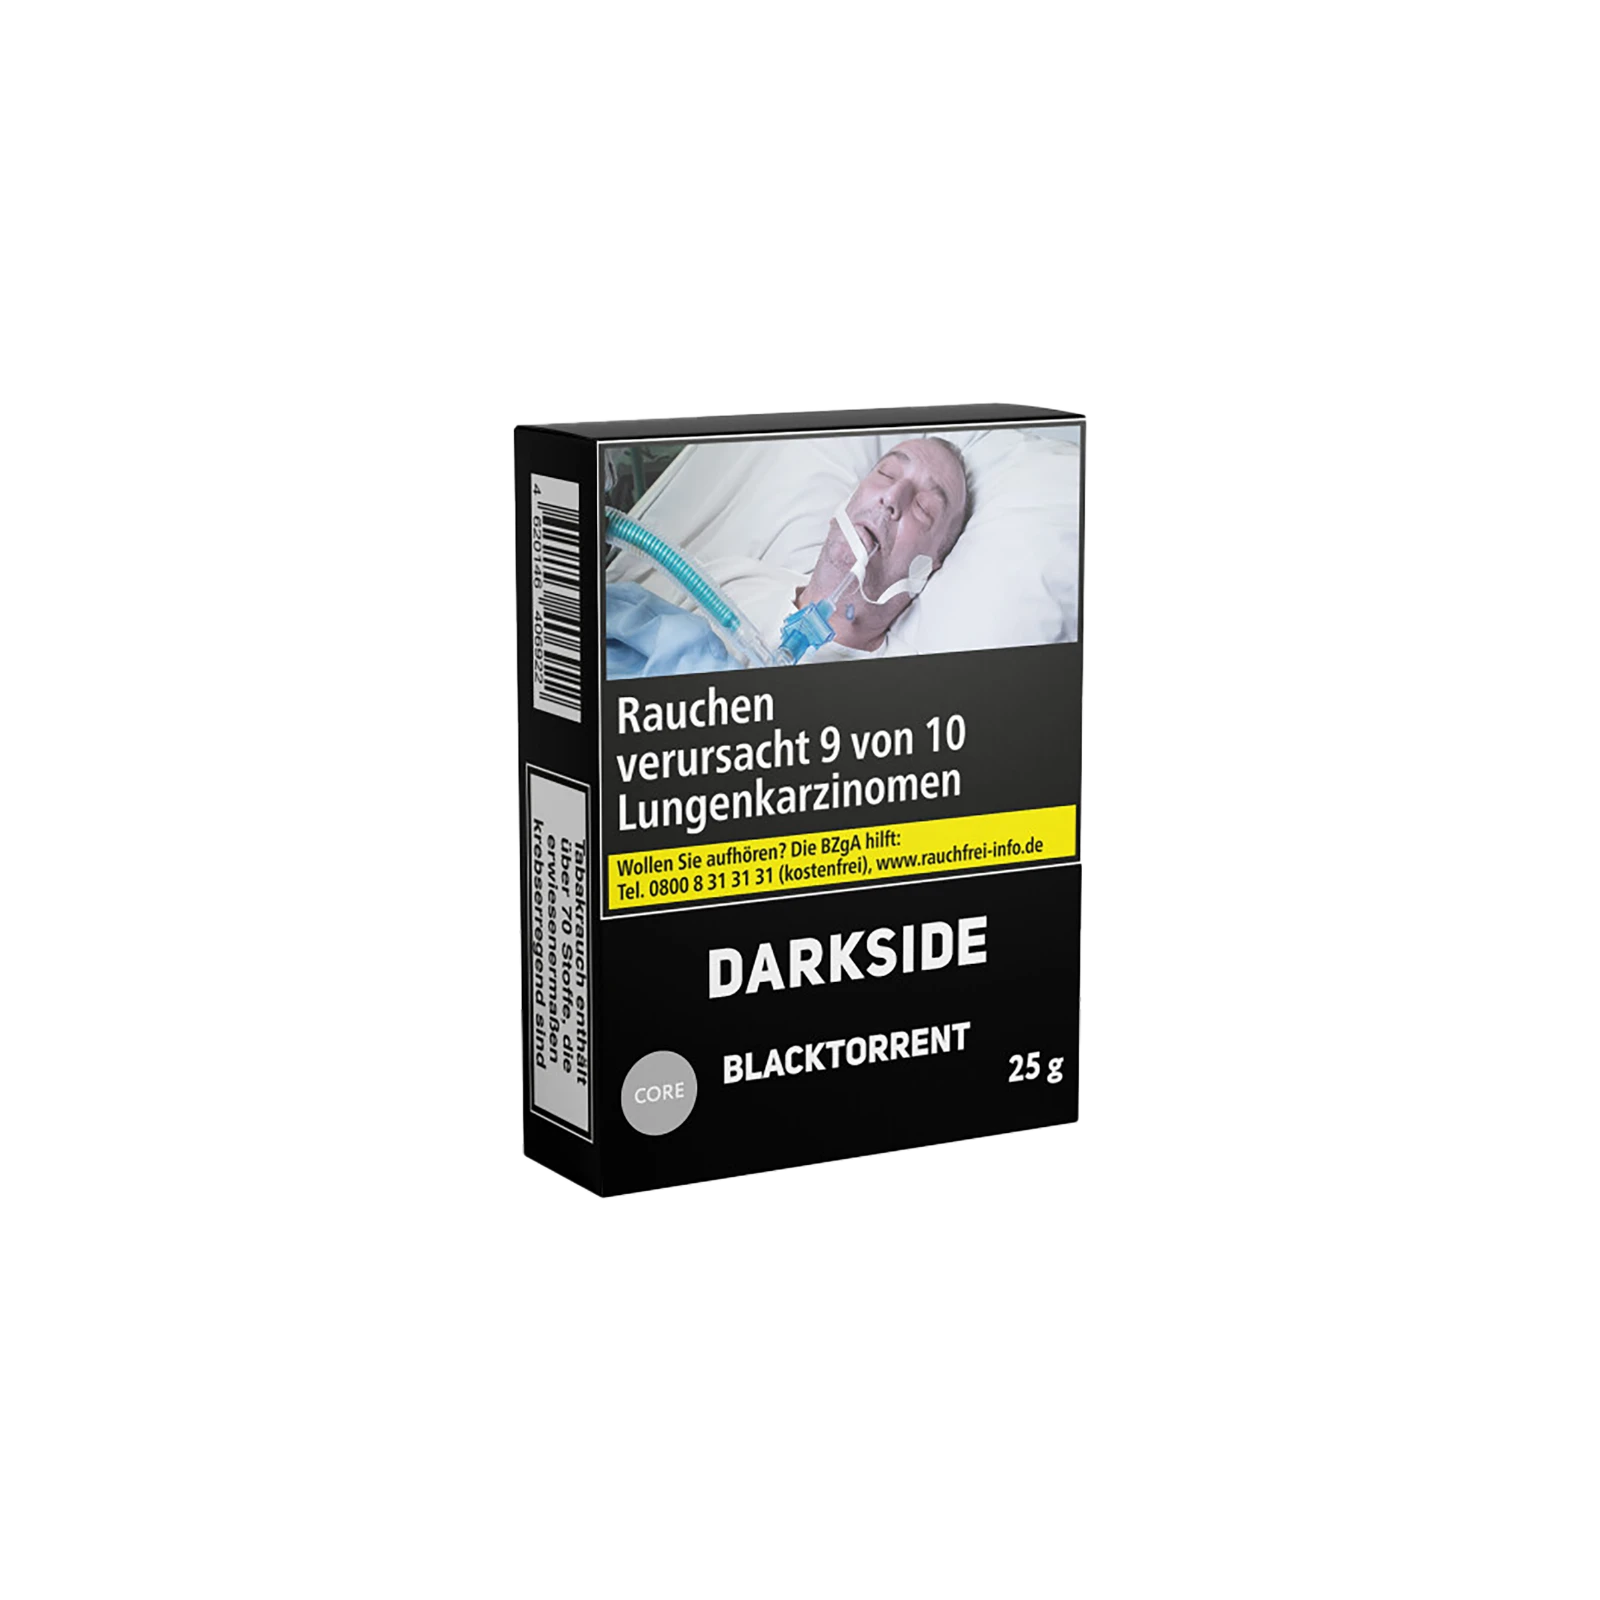 Darkside - Core - Blacktorrent - 25 g